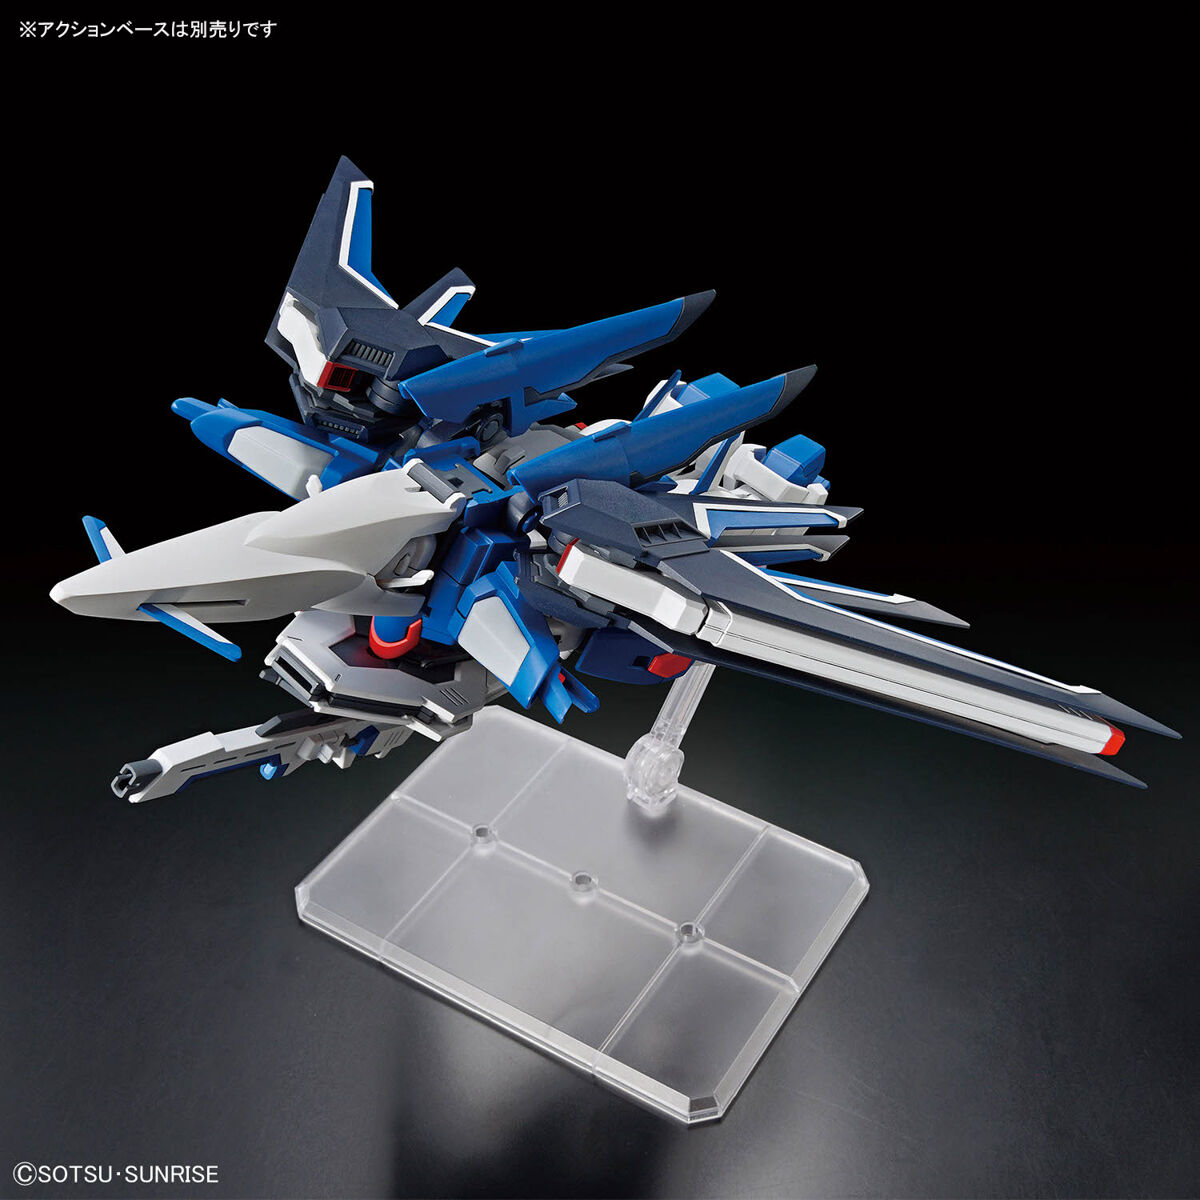 HGCE 1/144 No.243 STTS-909 Rising Freedom Gundam